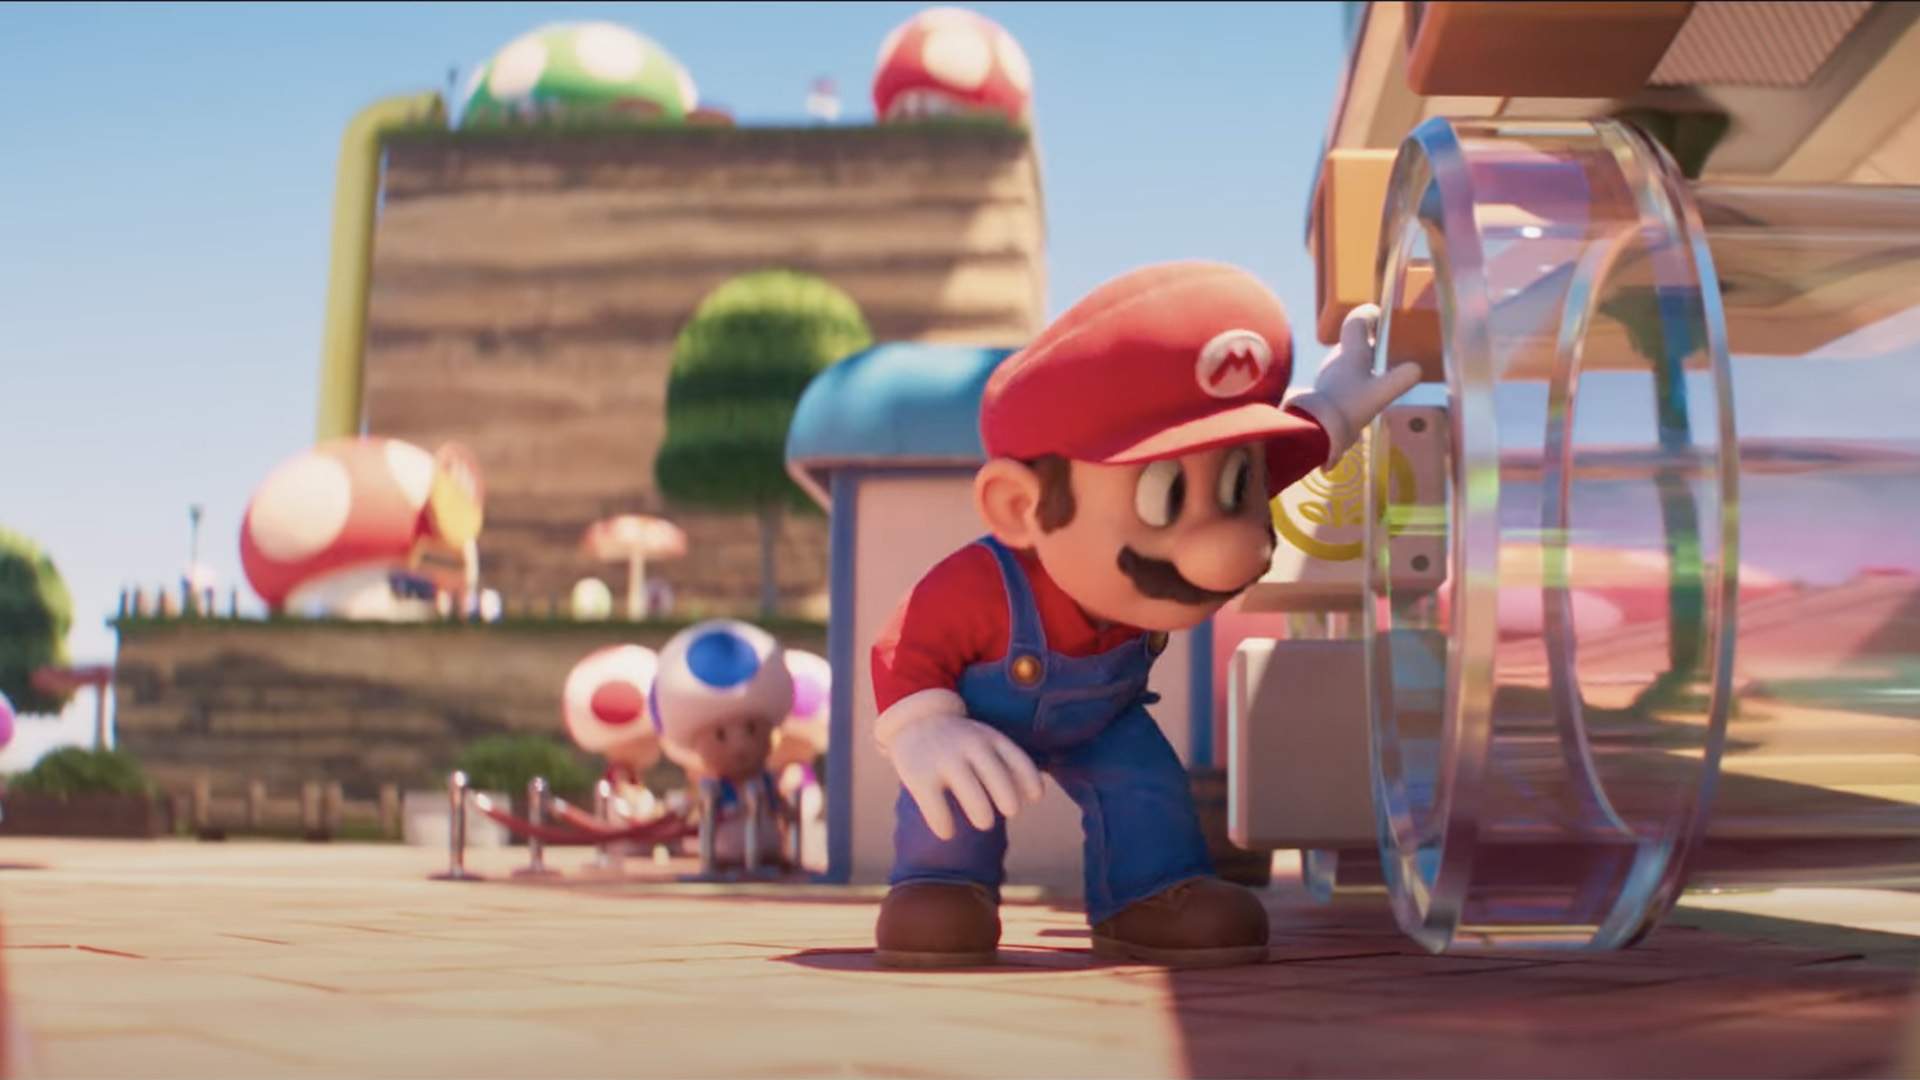 Let's Go: The Latest Sneak Peek at 'The Super Mario Bros Movie' Is a Mushroom Kingdom Super Fan's Dream